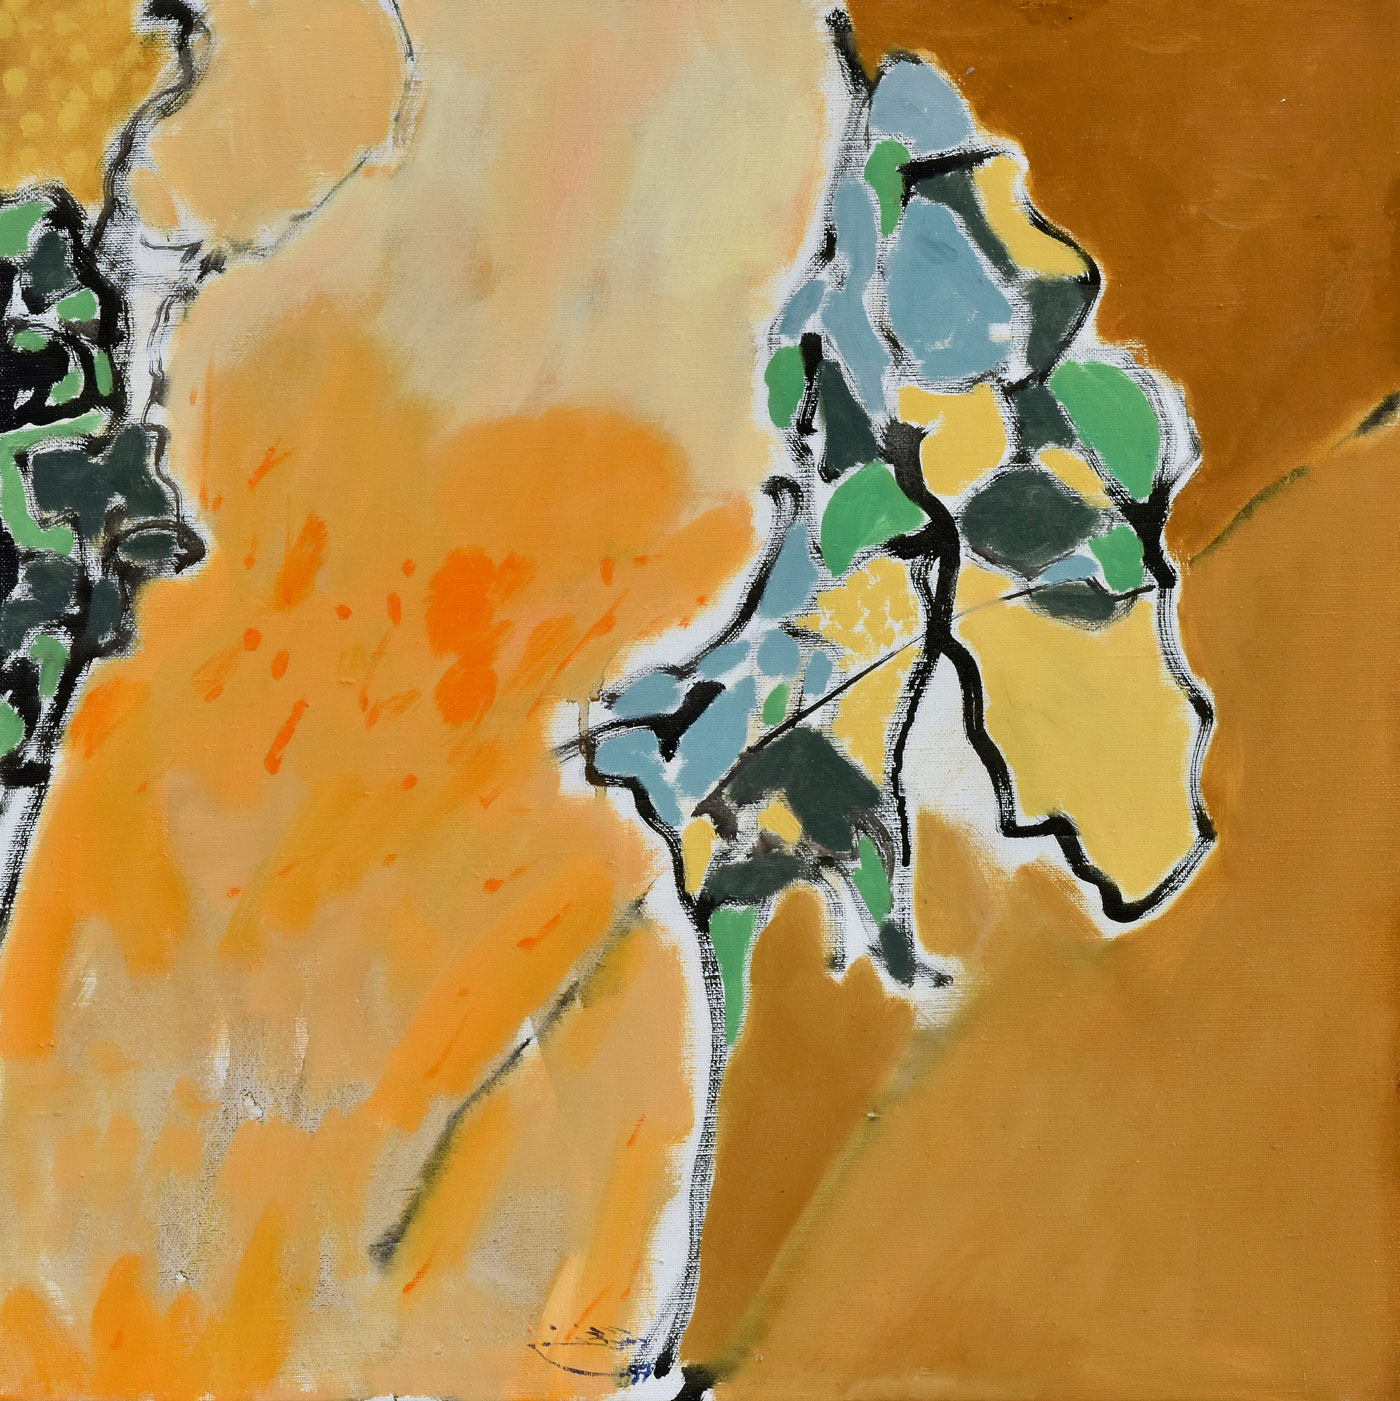 figurative-landscape-4-series rashid al khalifa